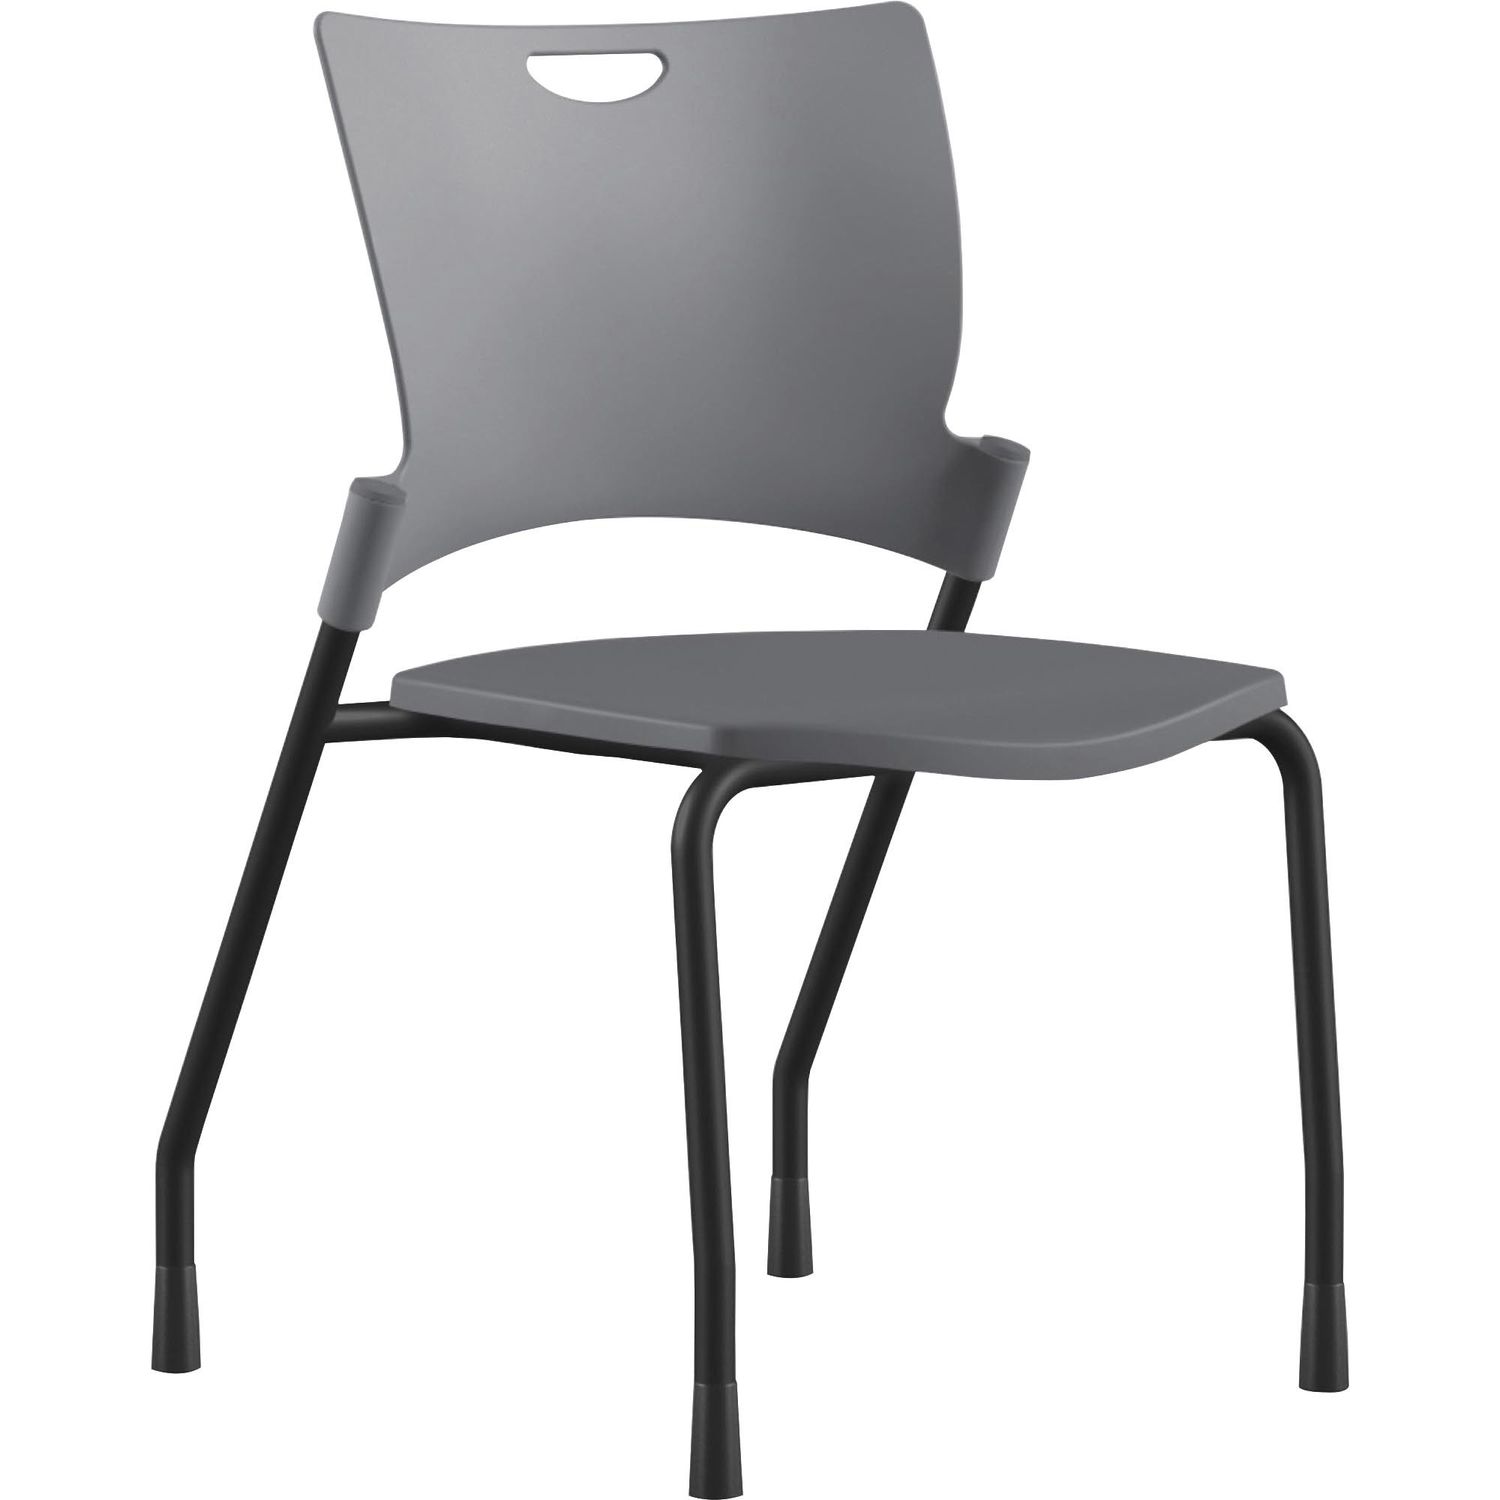 Bella Plastic Seat Stack Chair Dove Thermoplastic Seat, Dove Gray Thermoplastic Back, Black Frame, Four-legged Base, 1 Each